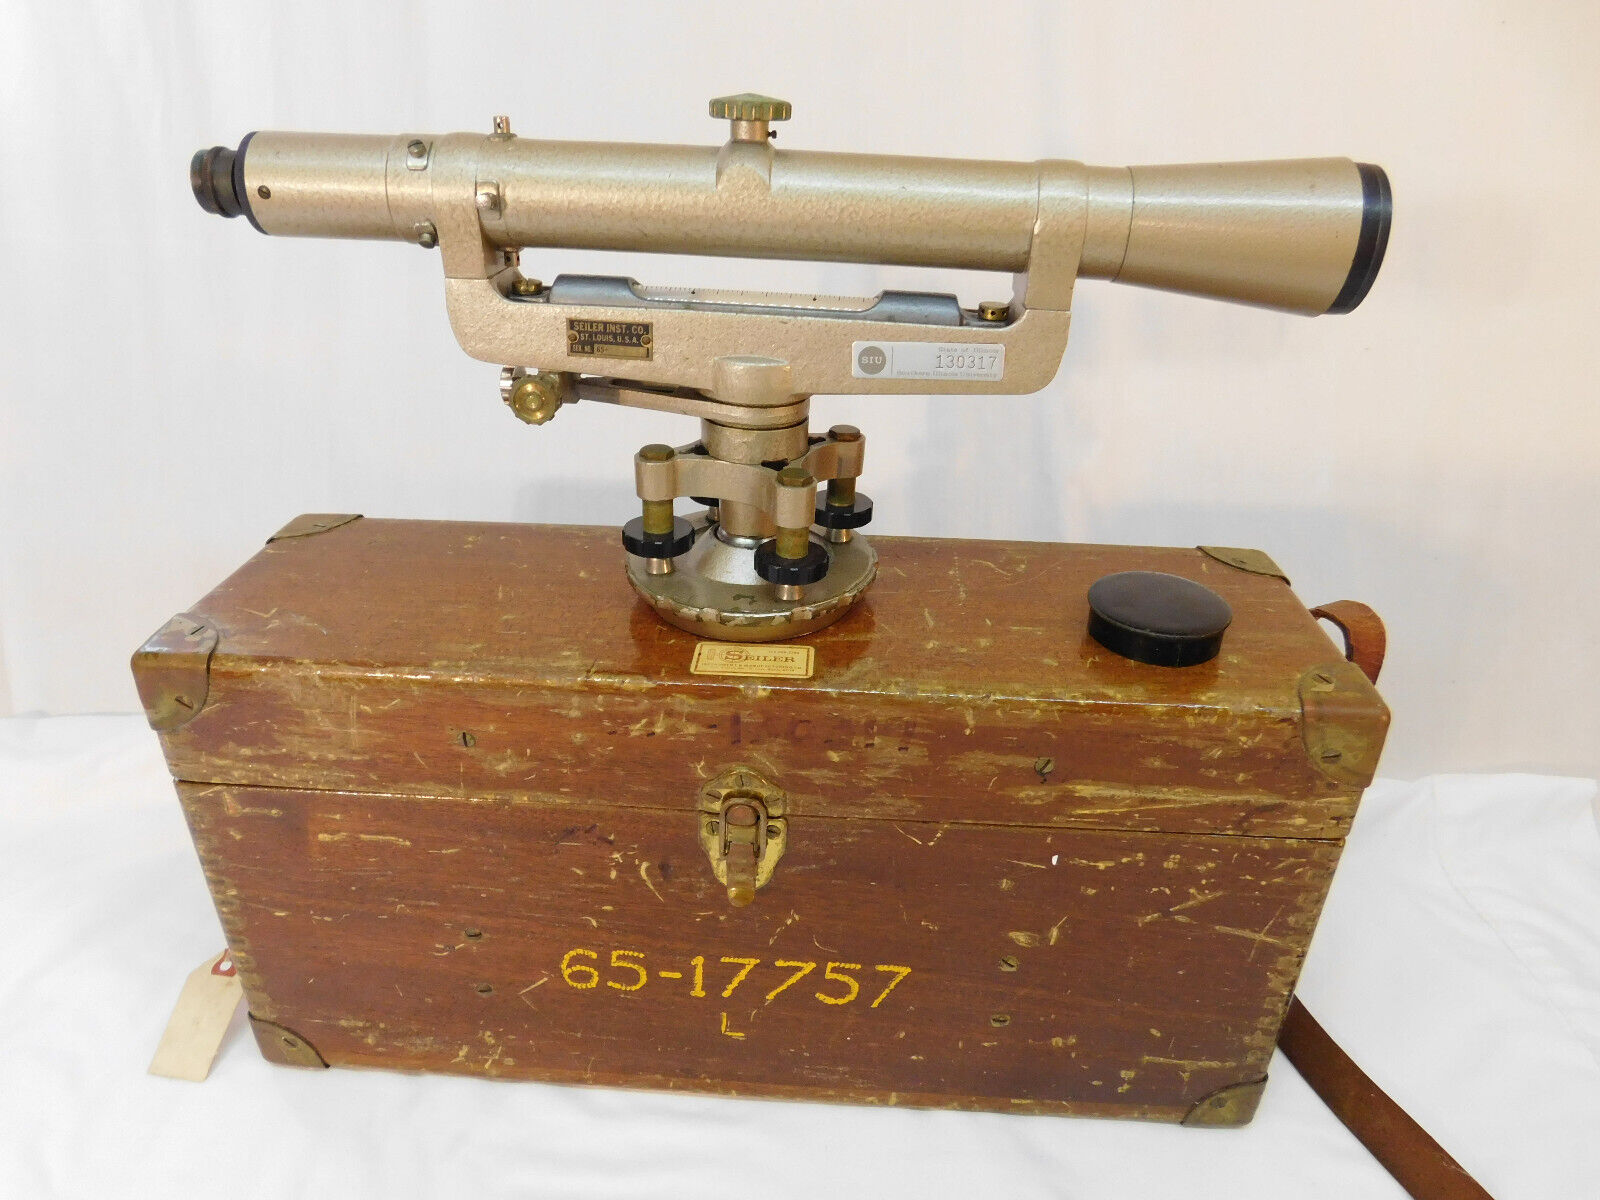 Vintage Seiler Instrument Company Survey Transit w/Box - Model 2060? #65-17757